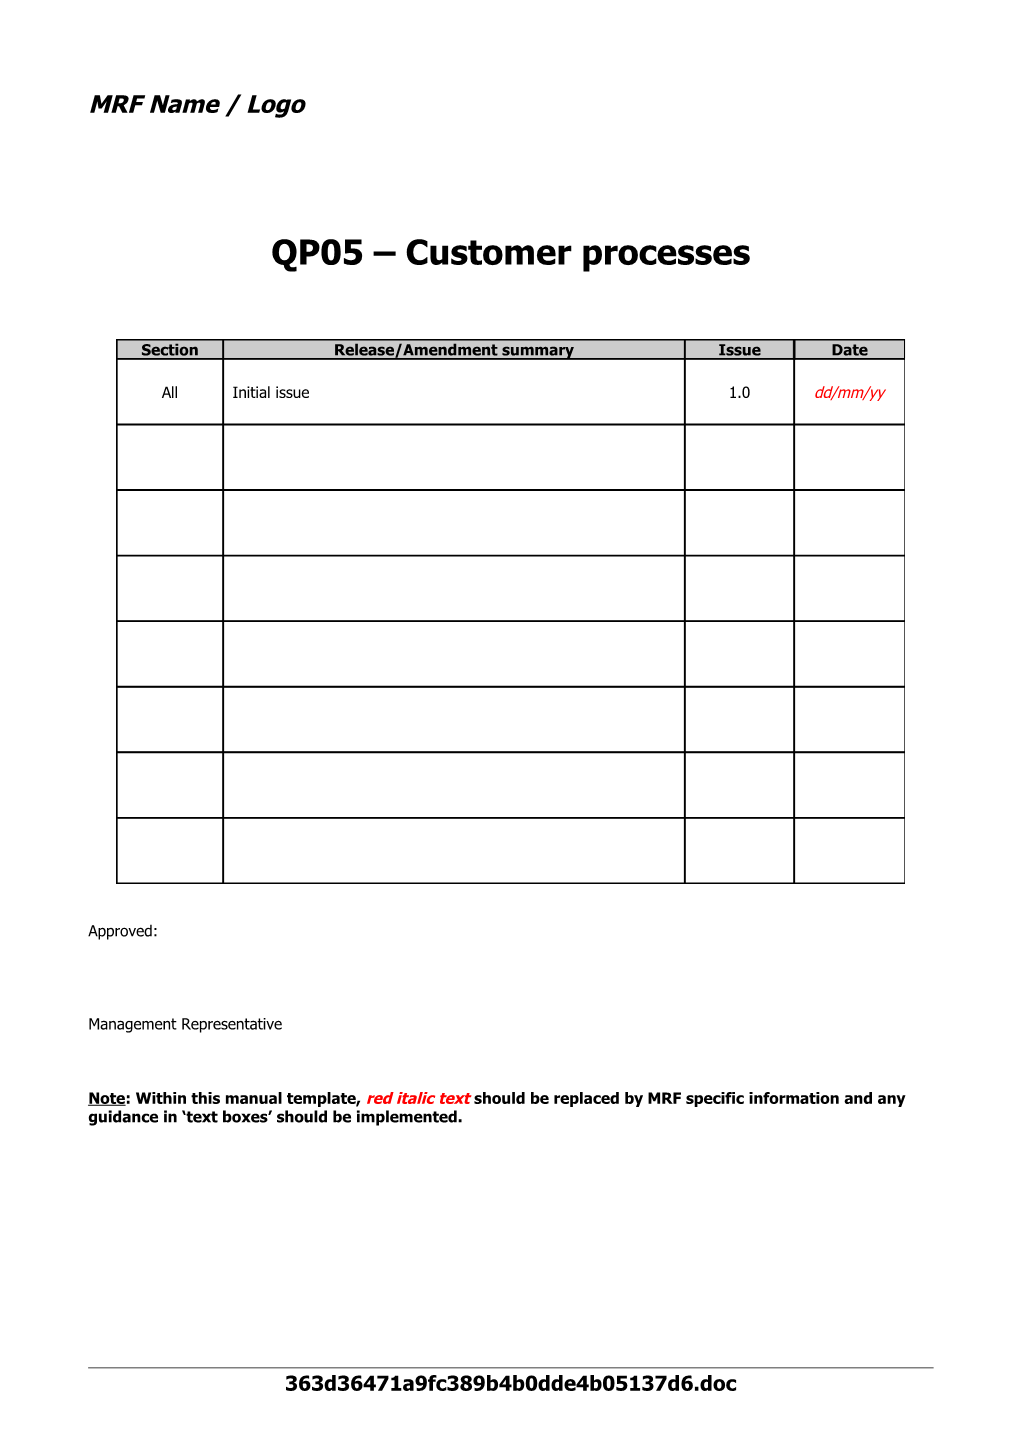 QP05 Customer Processes